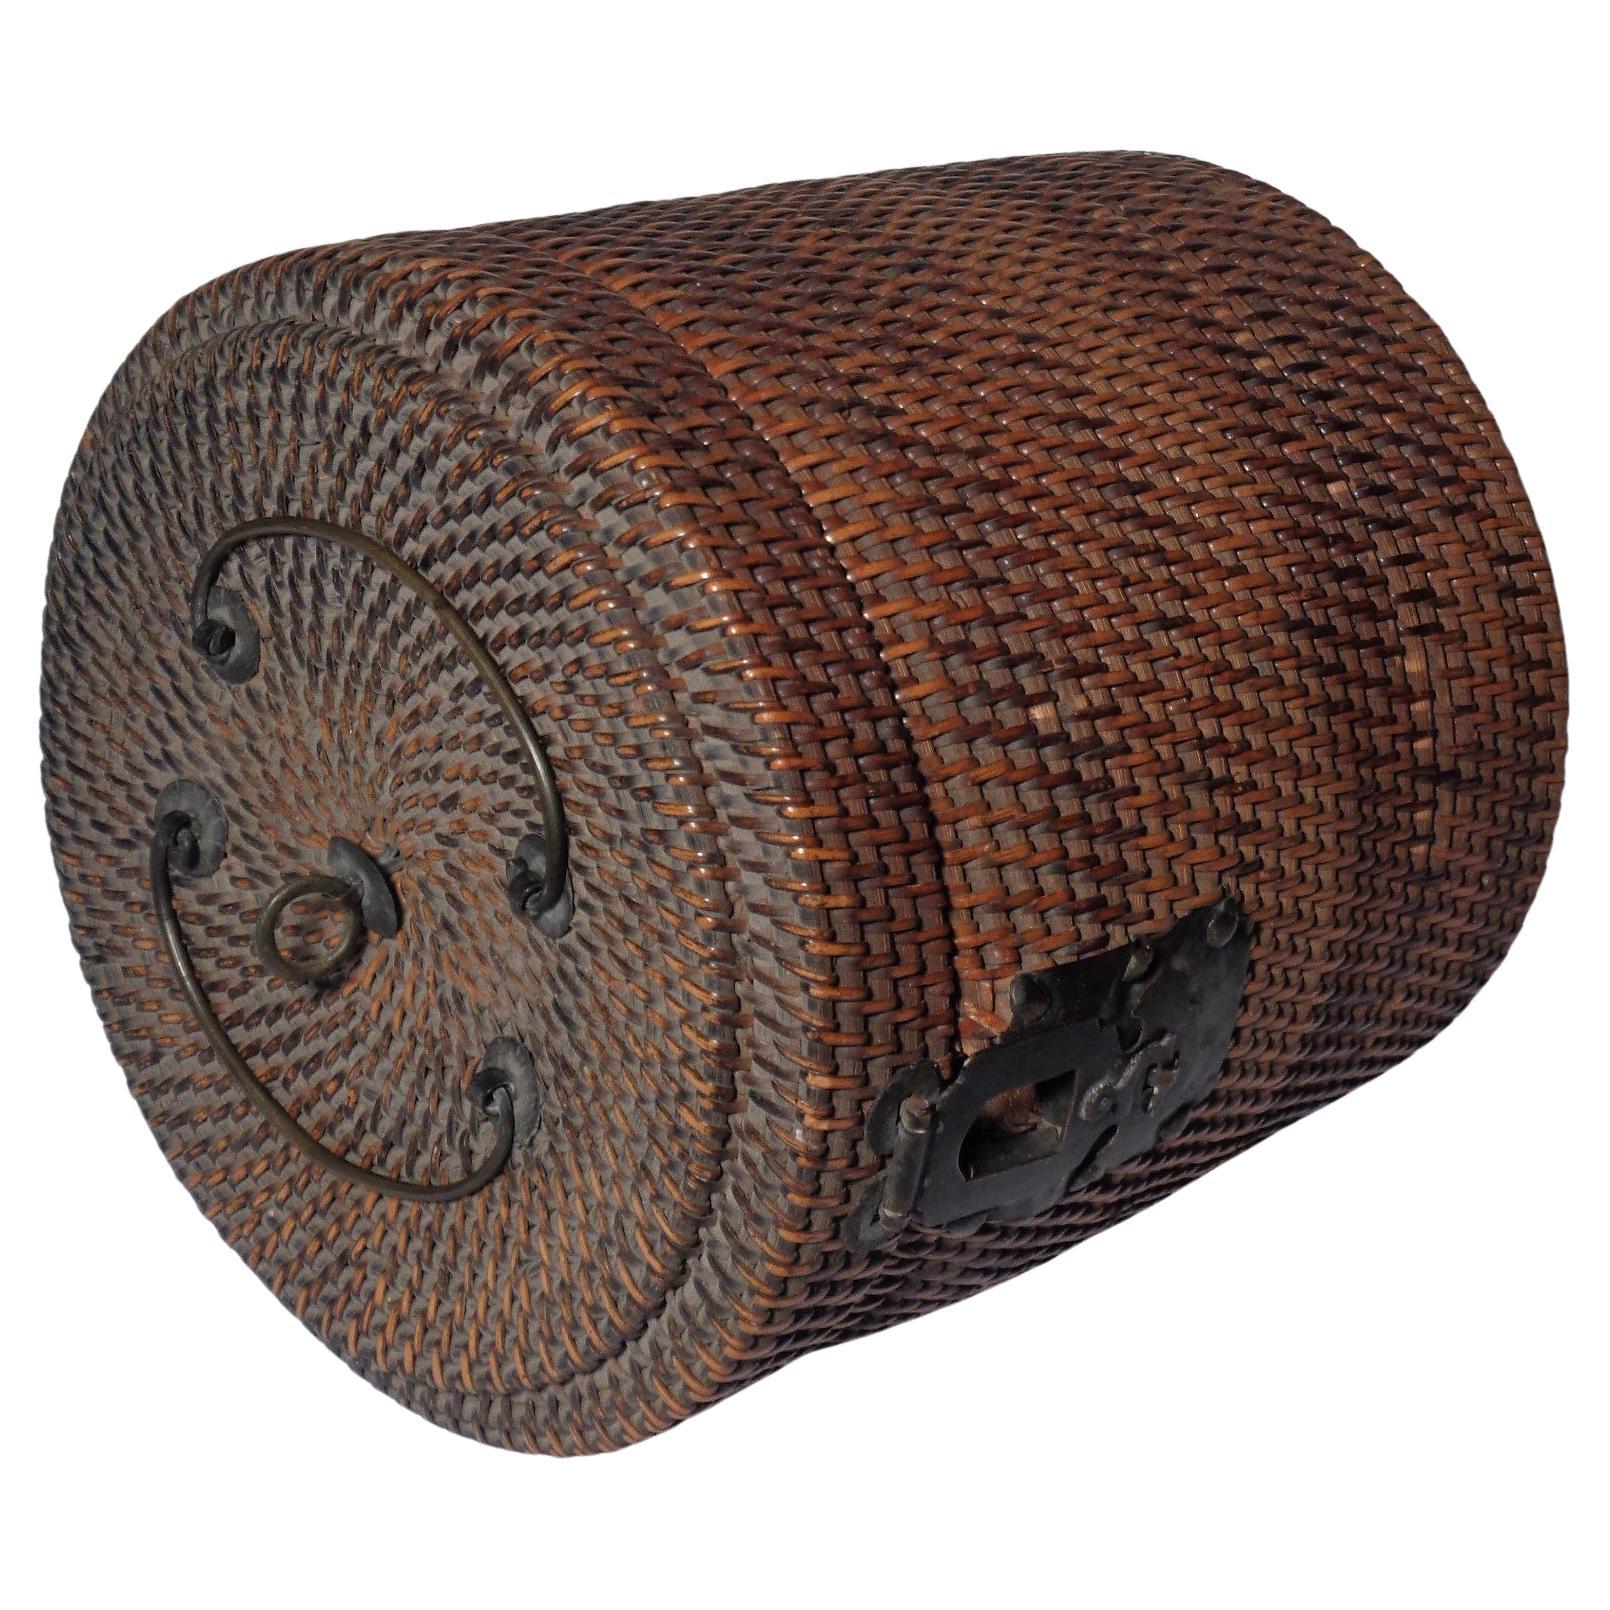  19th Century Chinese Woven Wicker Tea Pot Basket 4